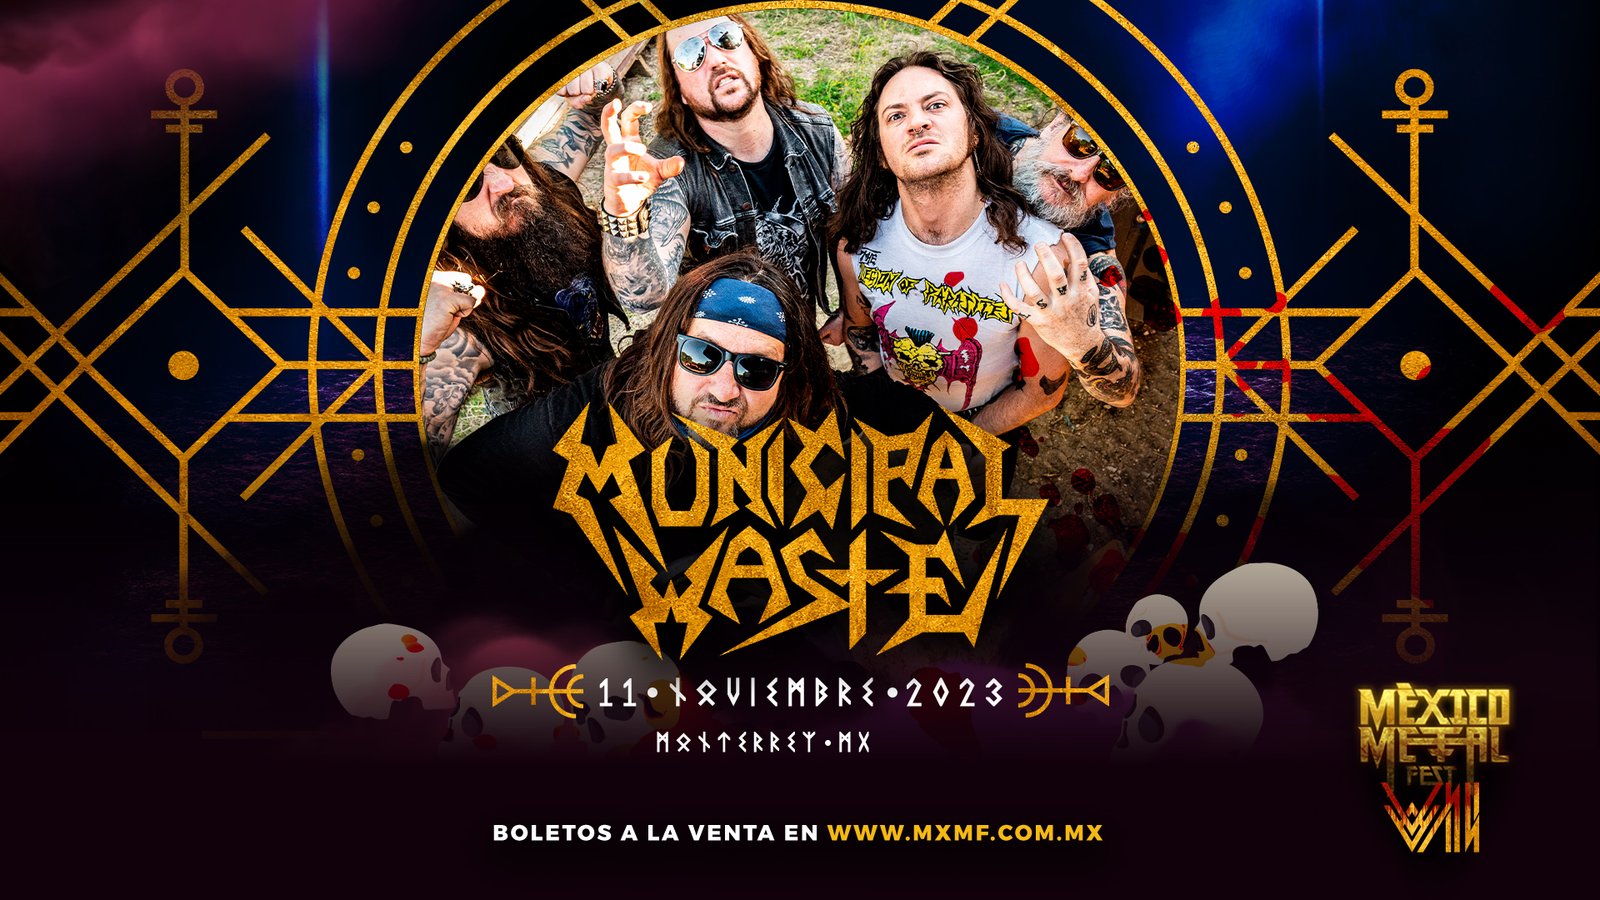 Municipal Waste en Mexico Metal Fest 2023